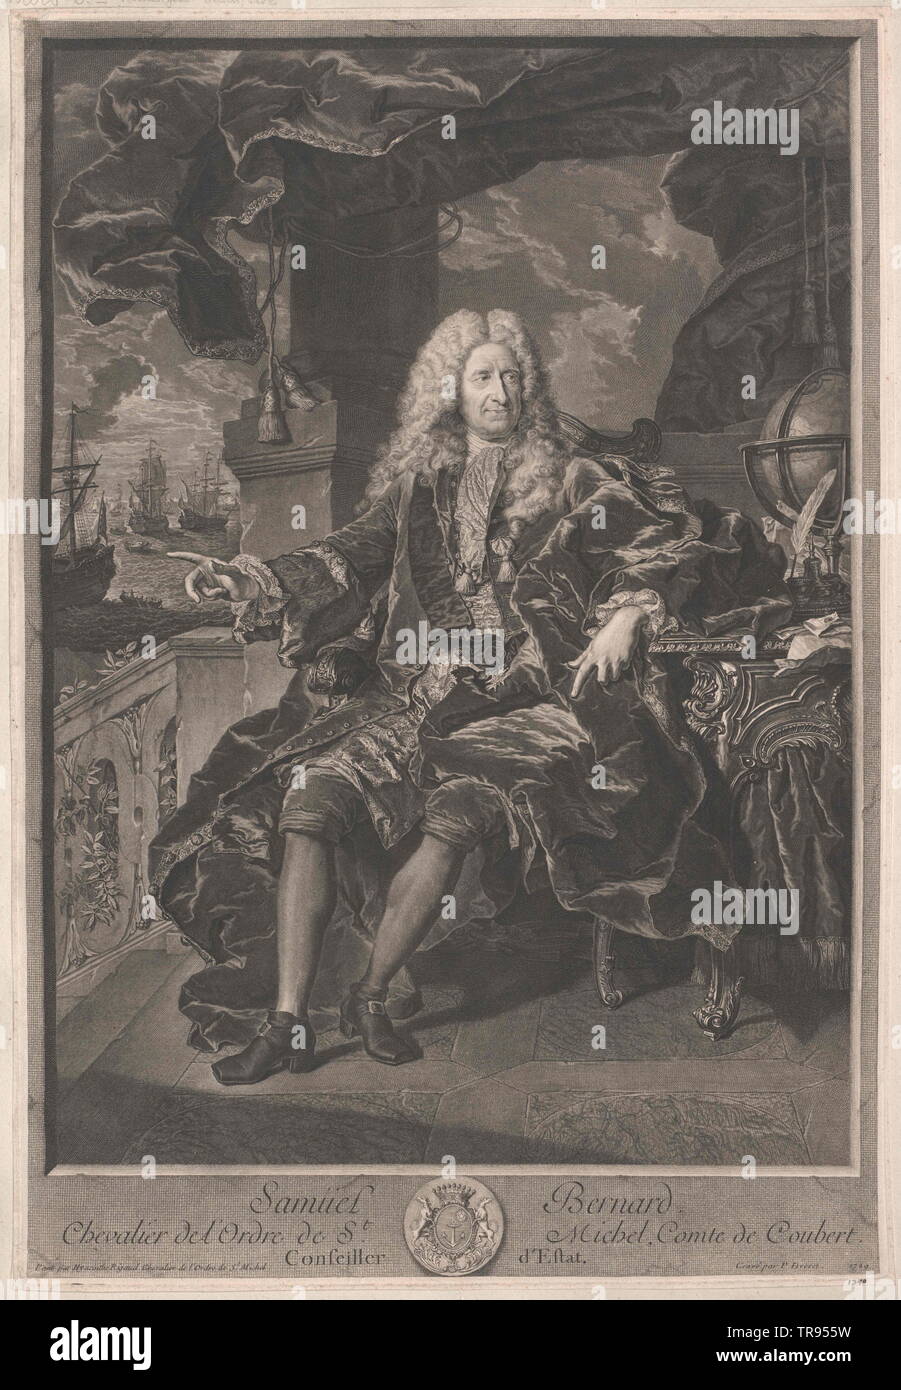 Bernard, Comte de Coubert, Samuel, French financier circa 1730, Additional-Rights-Clearance-Info-Not-Available Stock Photo